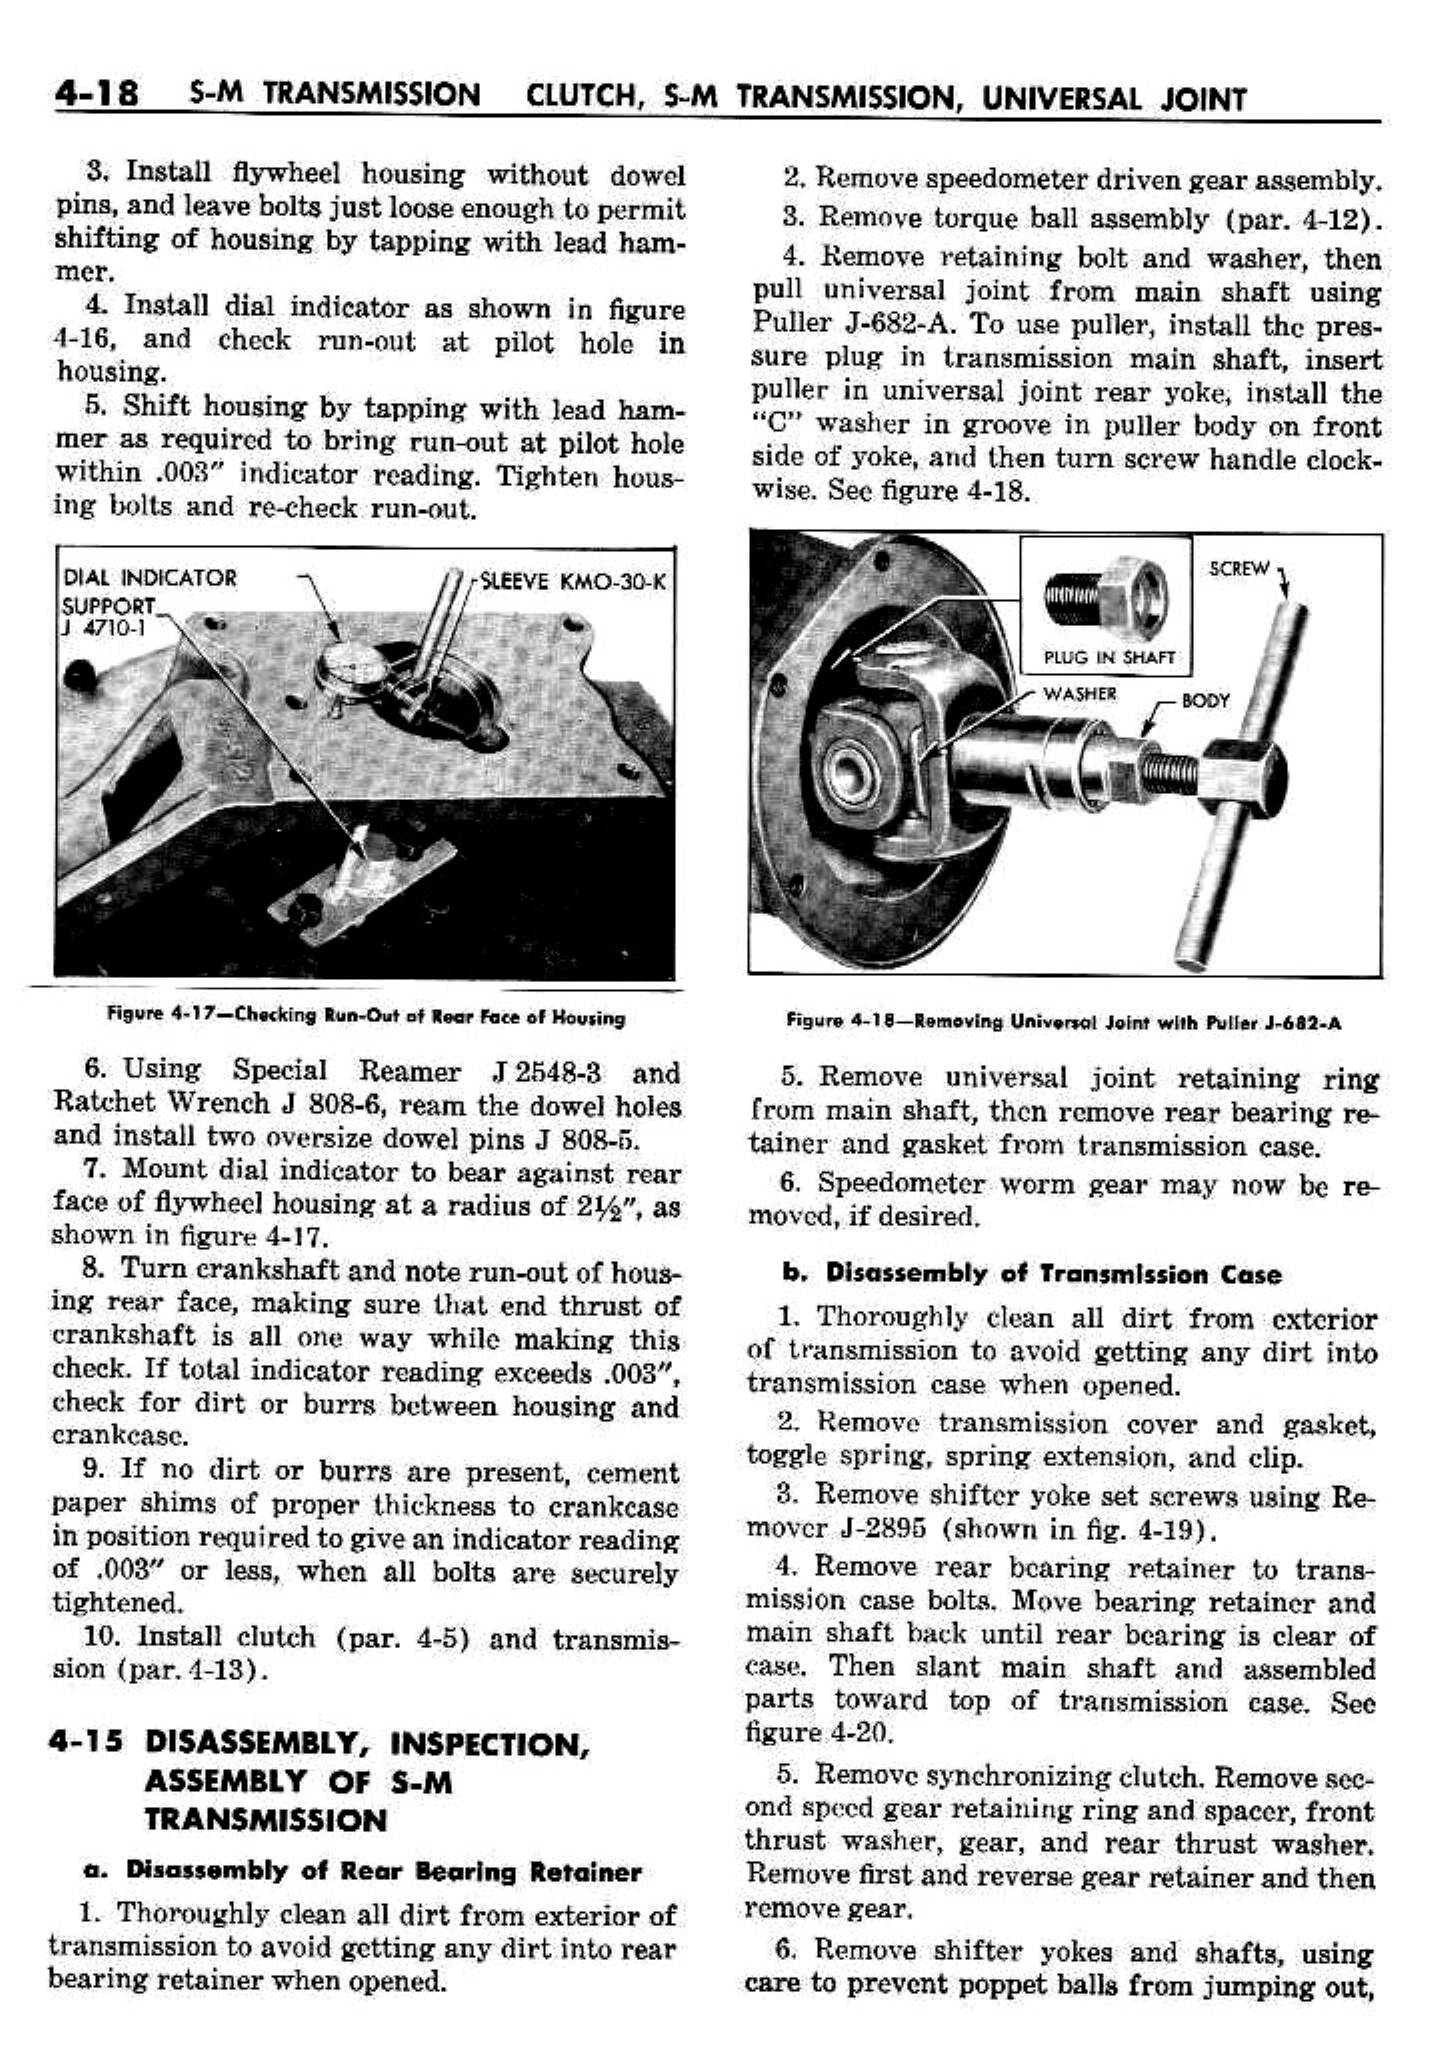 n_05 1958 Buick Shop Manual - Clutch & Man Trans_18.jpg